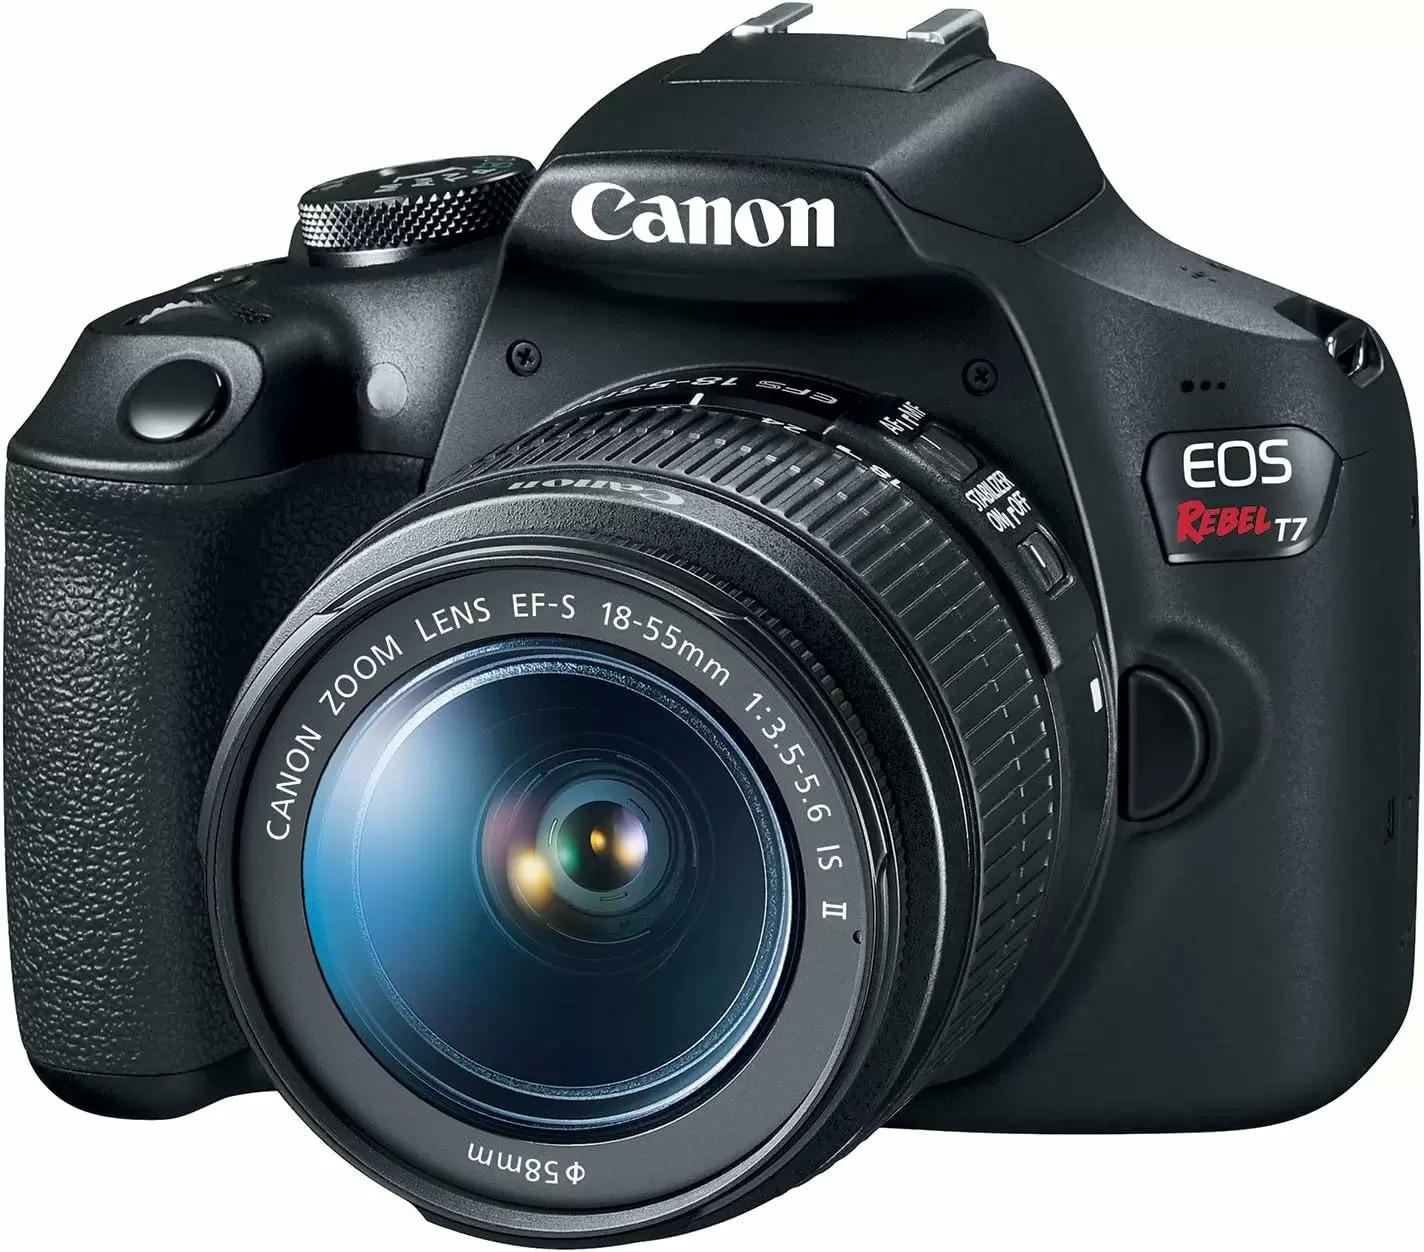 Canon EOS Rebel T7 Refurbished Digital Camera + 2 Lenses for $249.99 Shipped